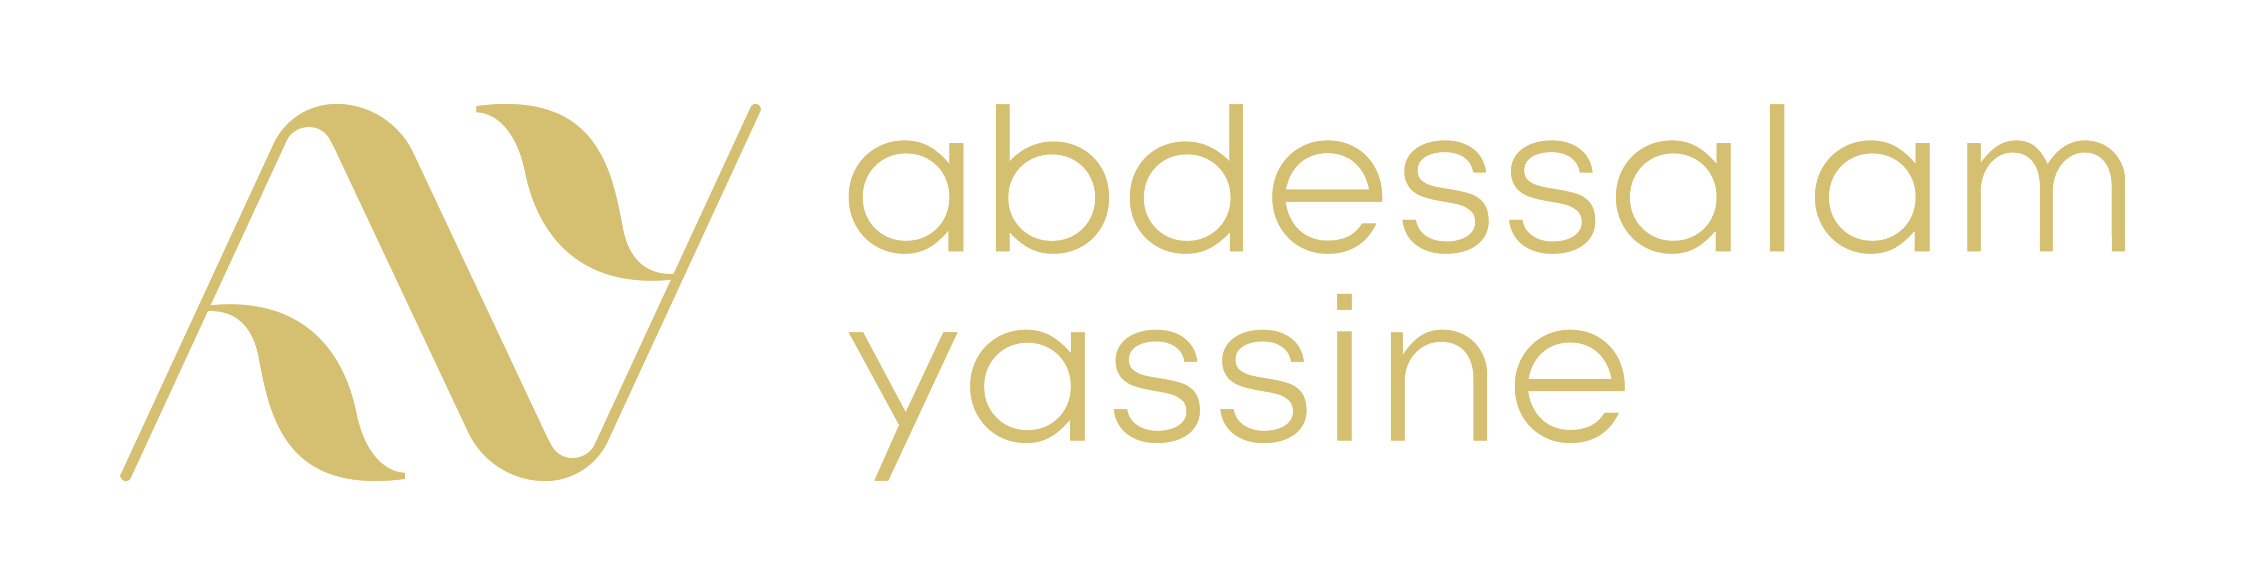 Abdessalam Yassine